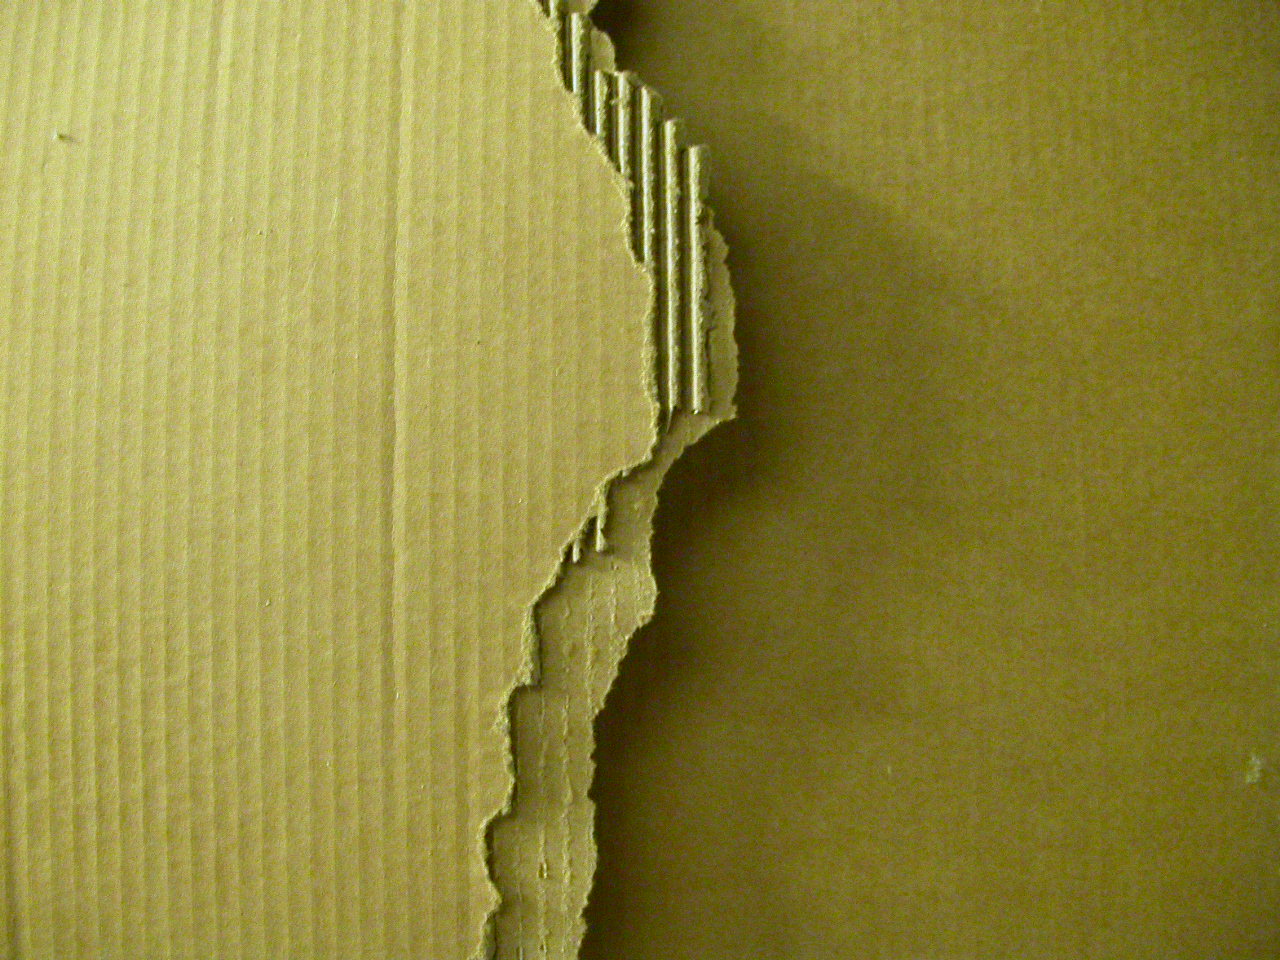 Ripped cardboard photo